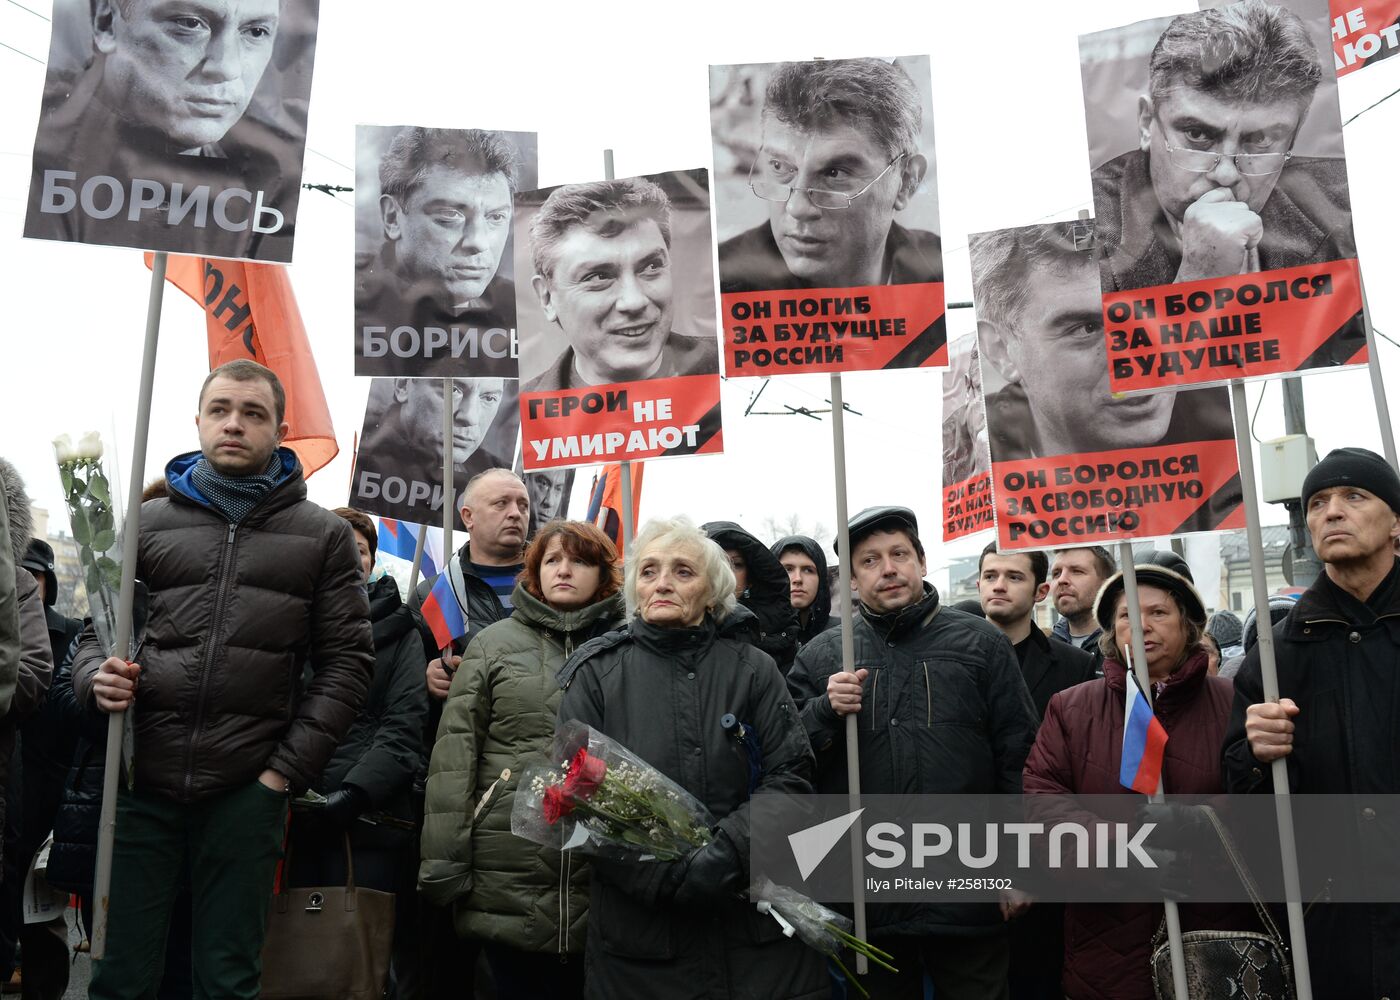 March in honor of politician Boris Nemtsov in Moscow